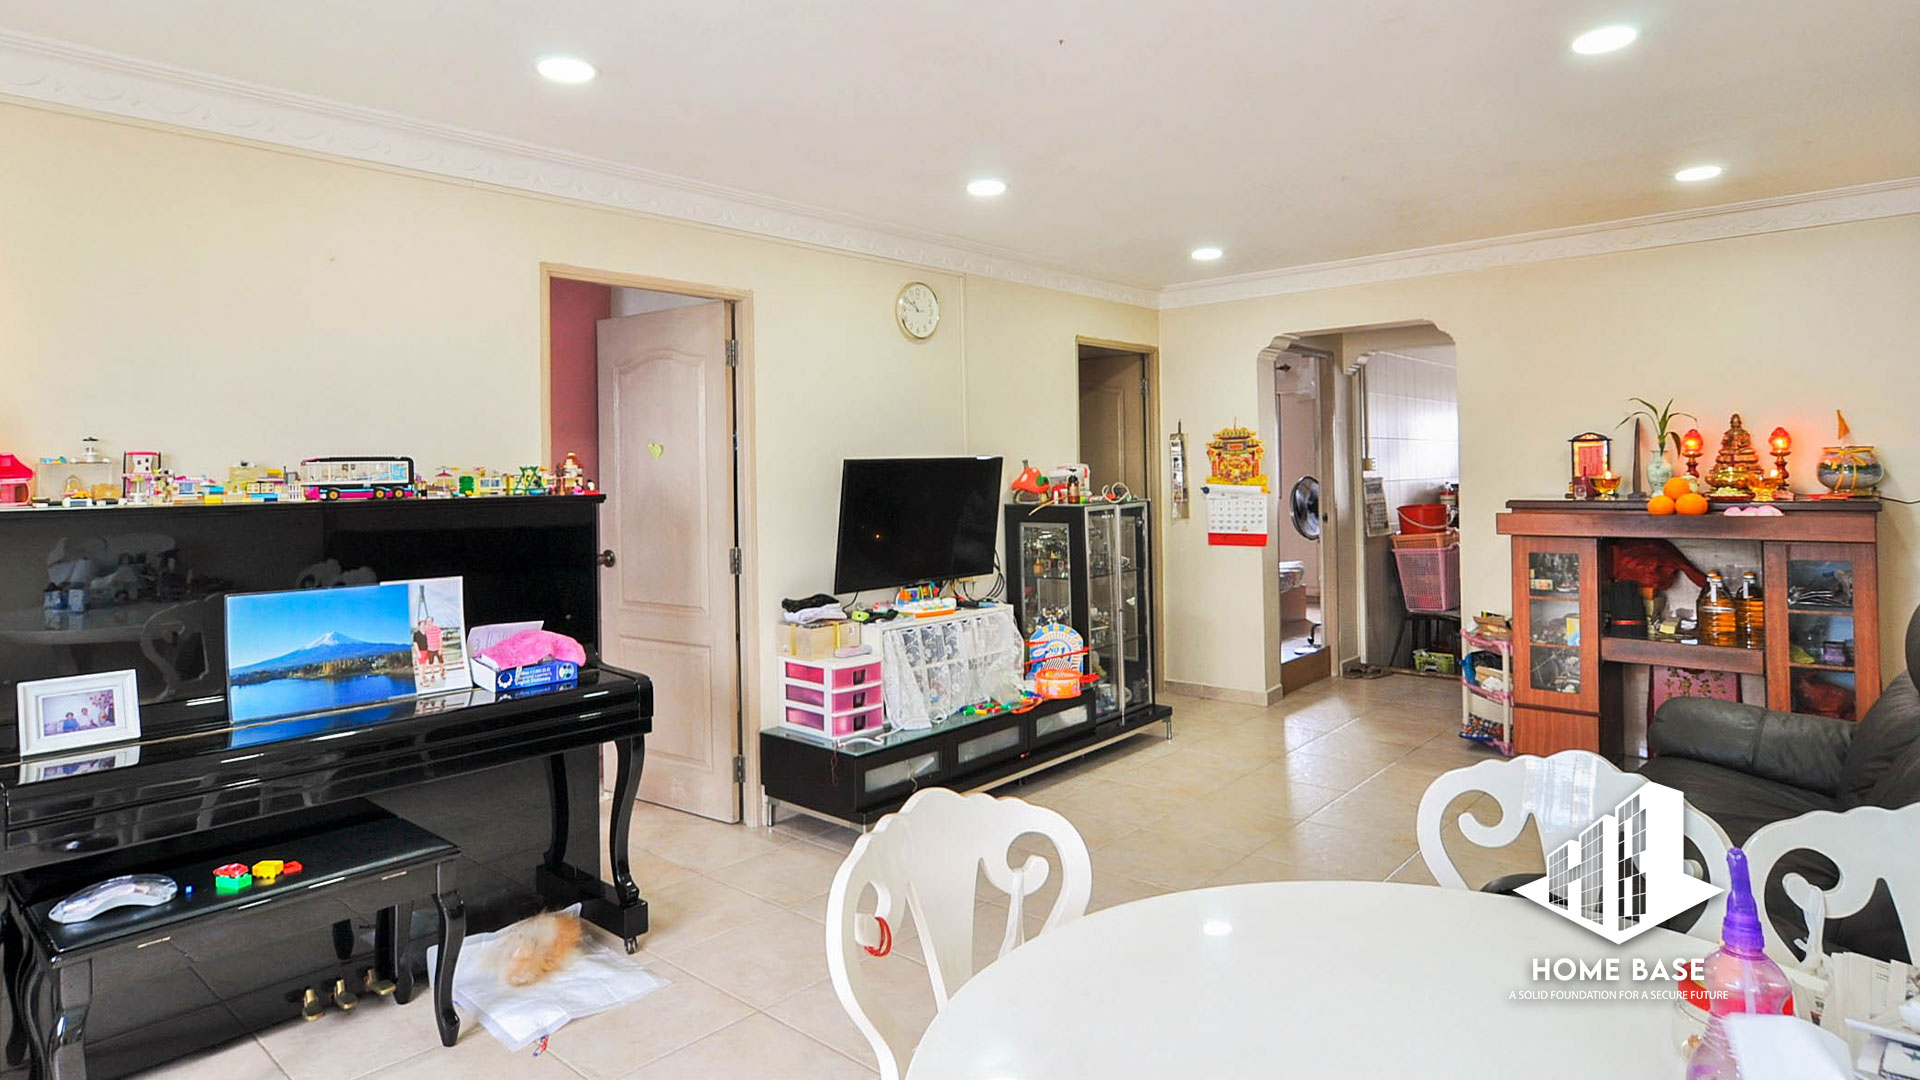 Living Room of 309 Hougang Ave 5 Img 1